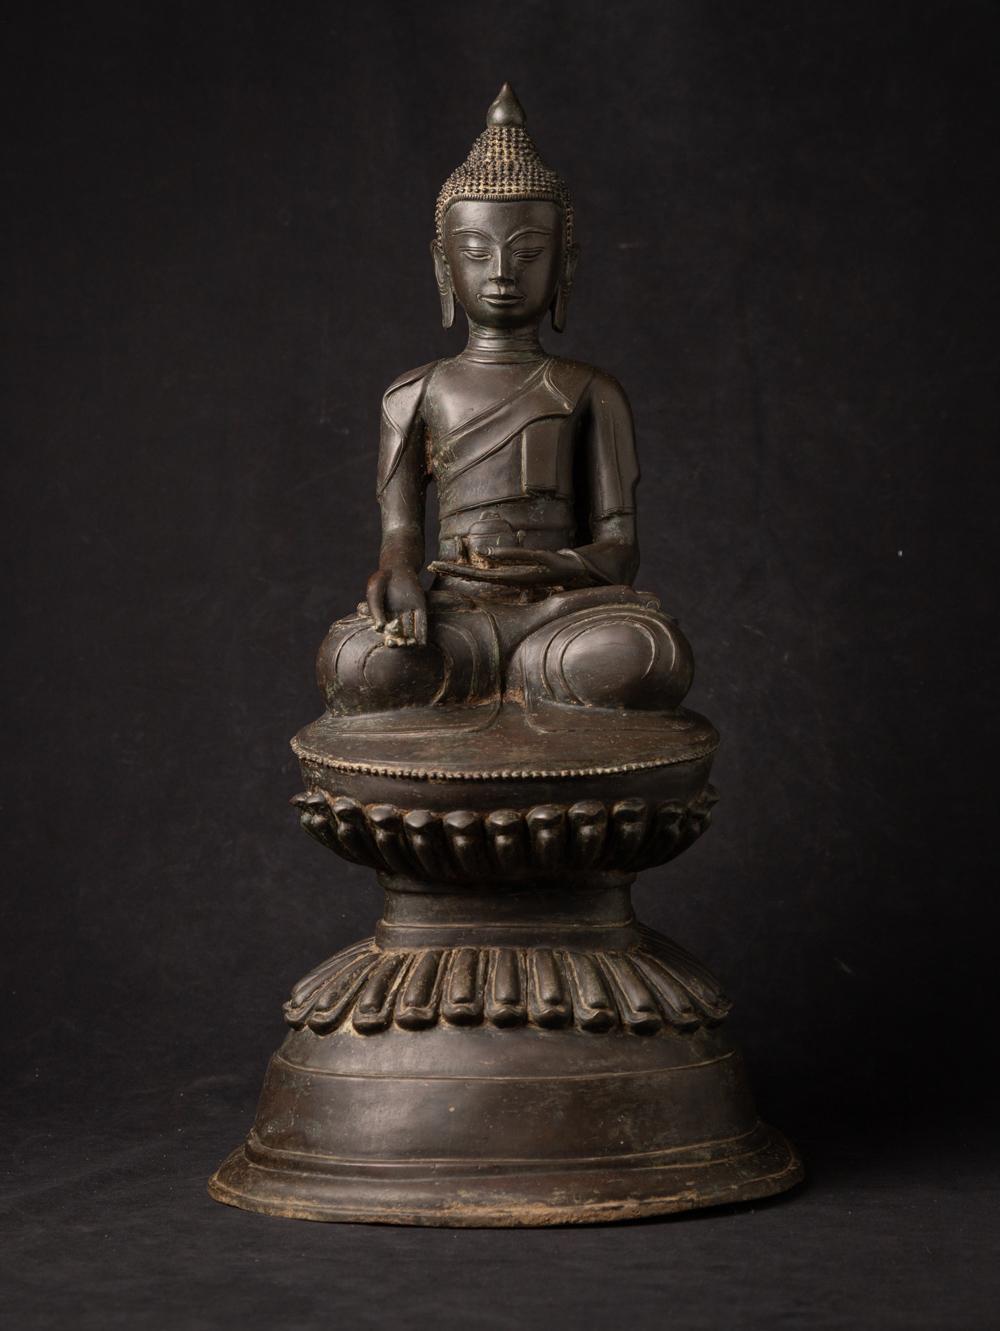 Old bronze Burmese Buddha statue
Material : bronze
54,5 cm high
28 cm wide and 25,5 cm deep
Amarapura style
Varada mudra
Early 20th century
Weight: 14,9 kgs
Originating from Burma
Nr: 3670-6